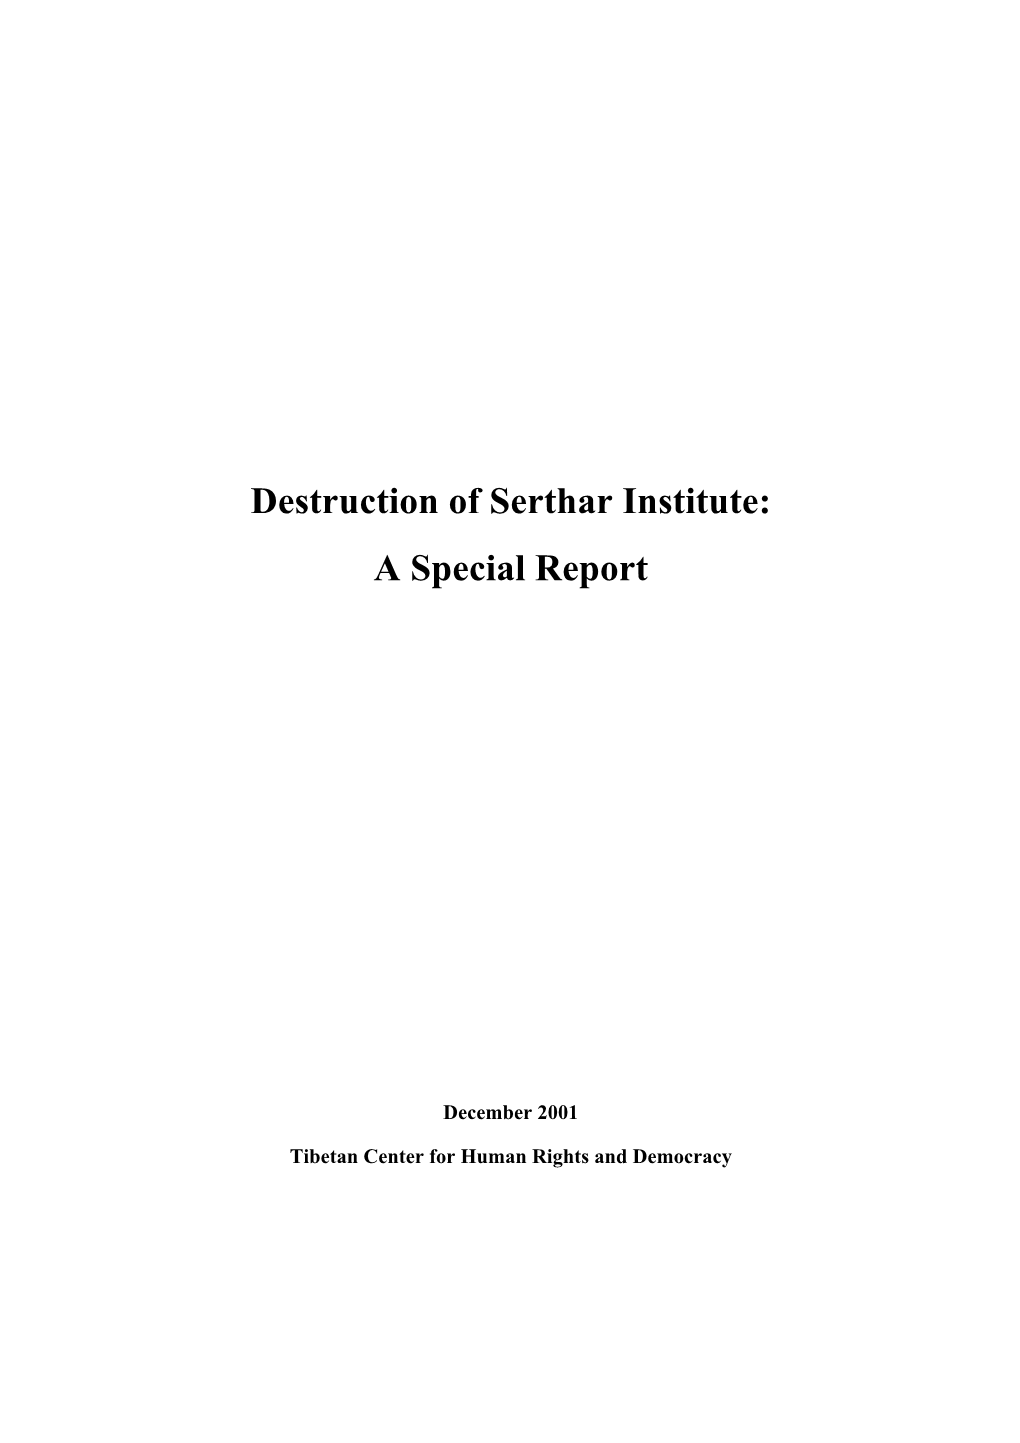 Destruction of Serthar Institute: a Special Report